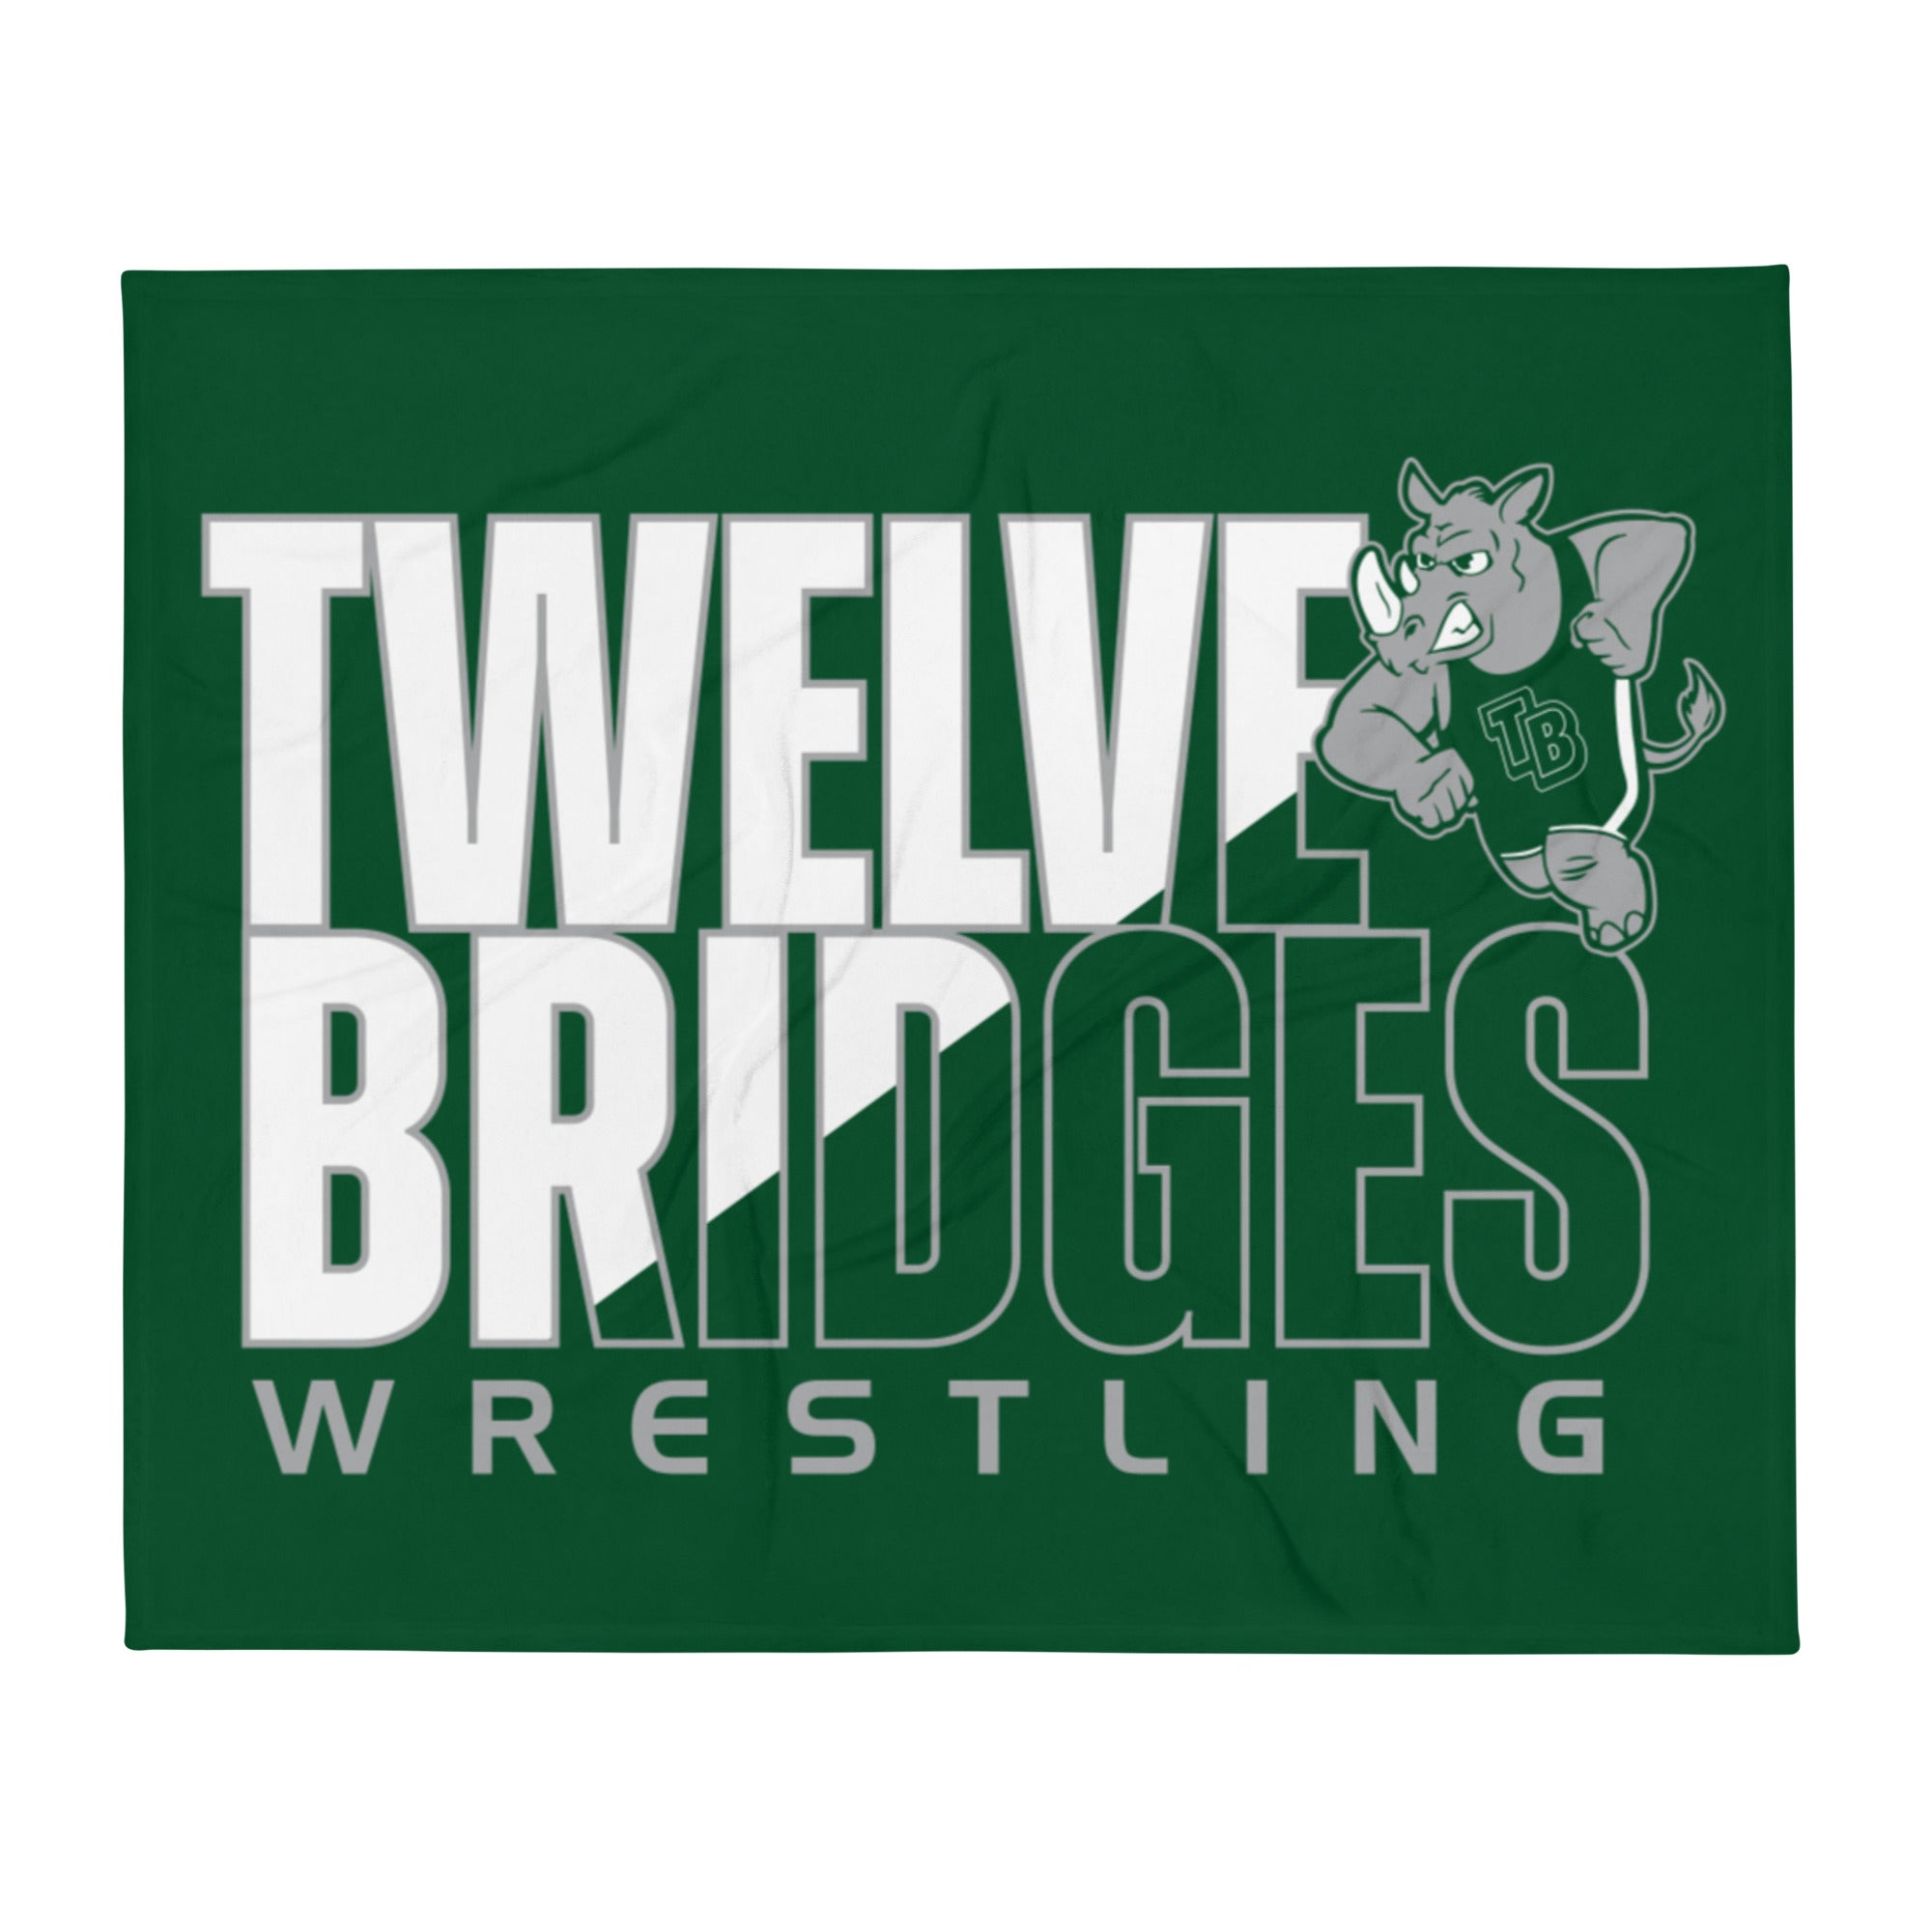 Twelve Bridges Wrestling Forest Throw Blanket 50 x 60